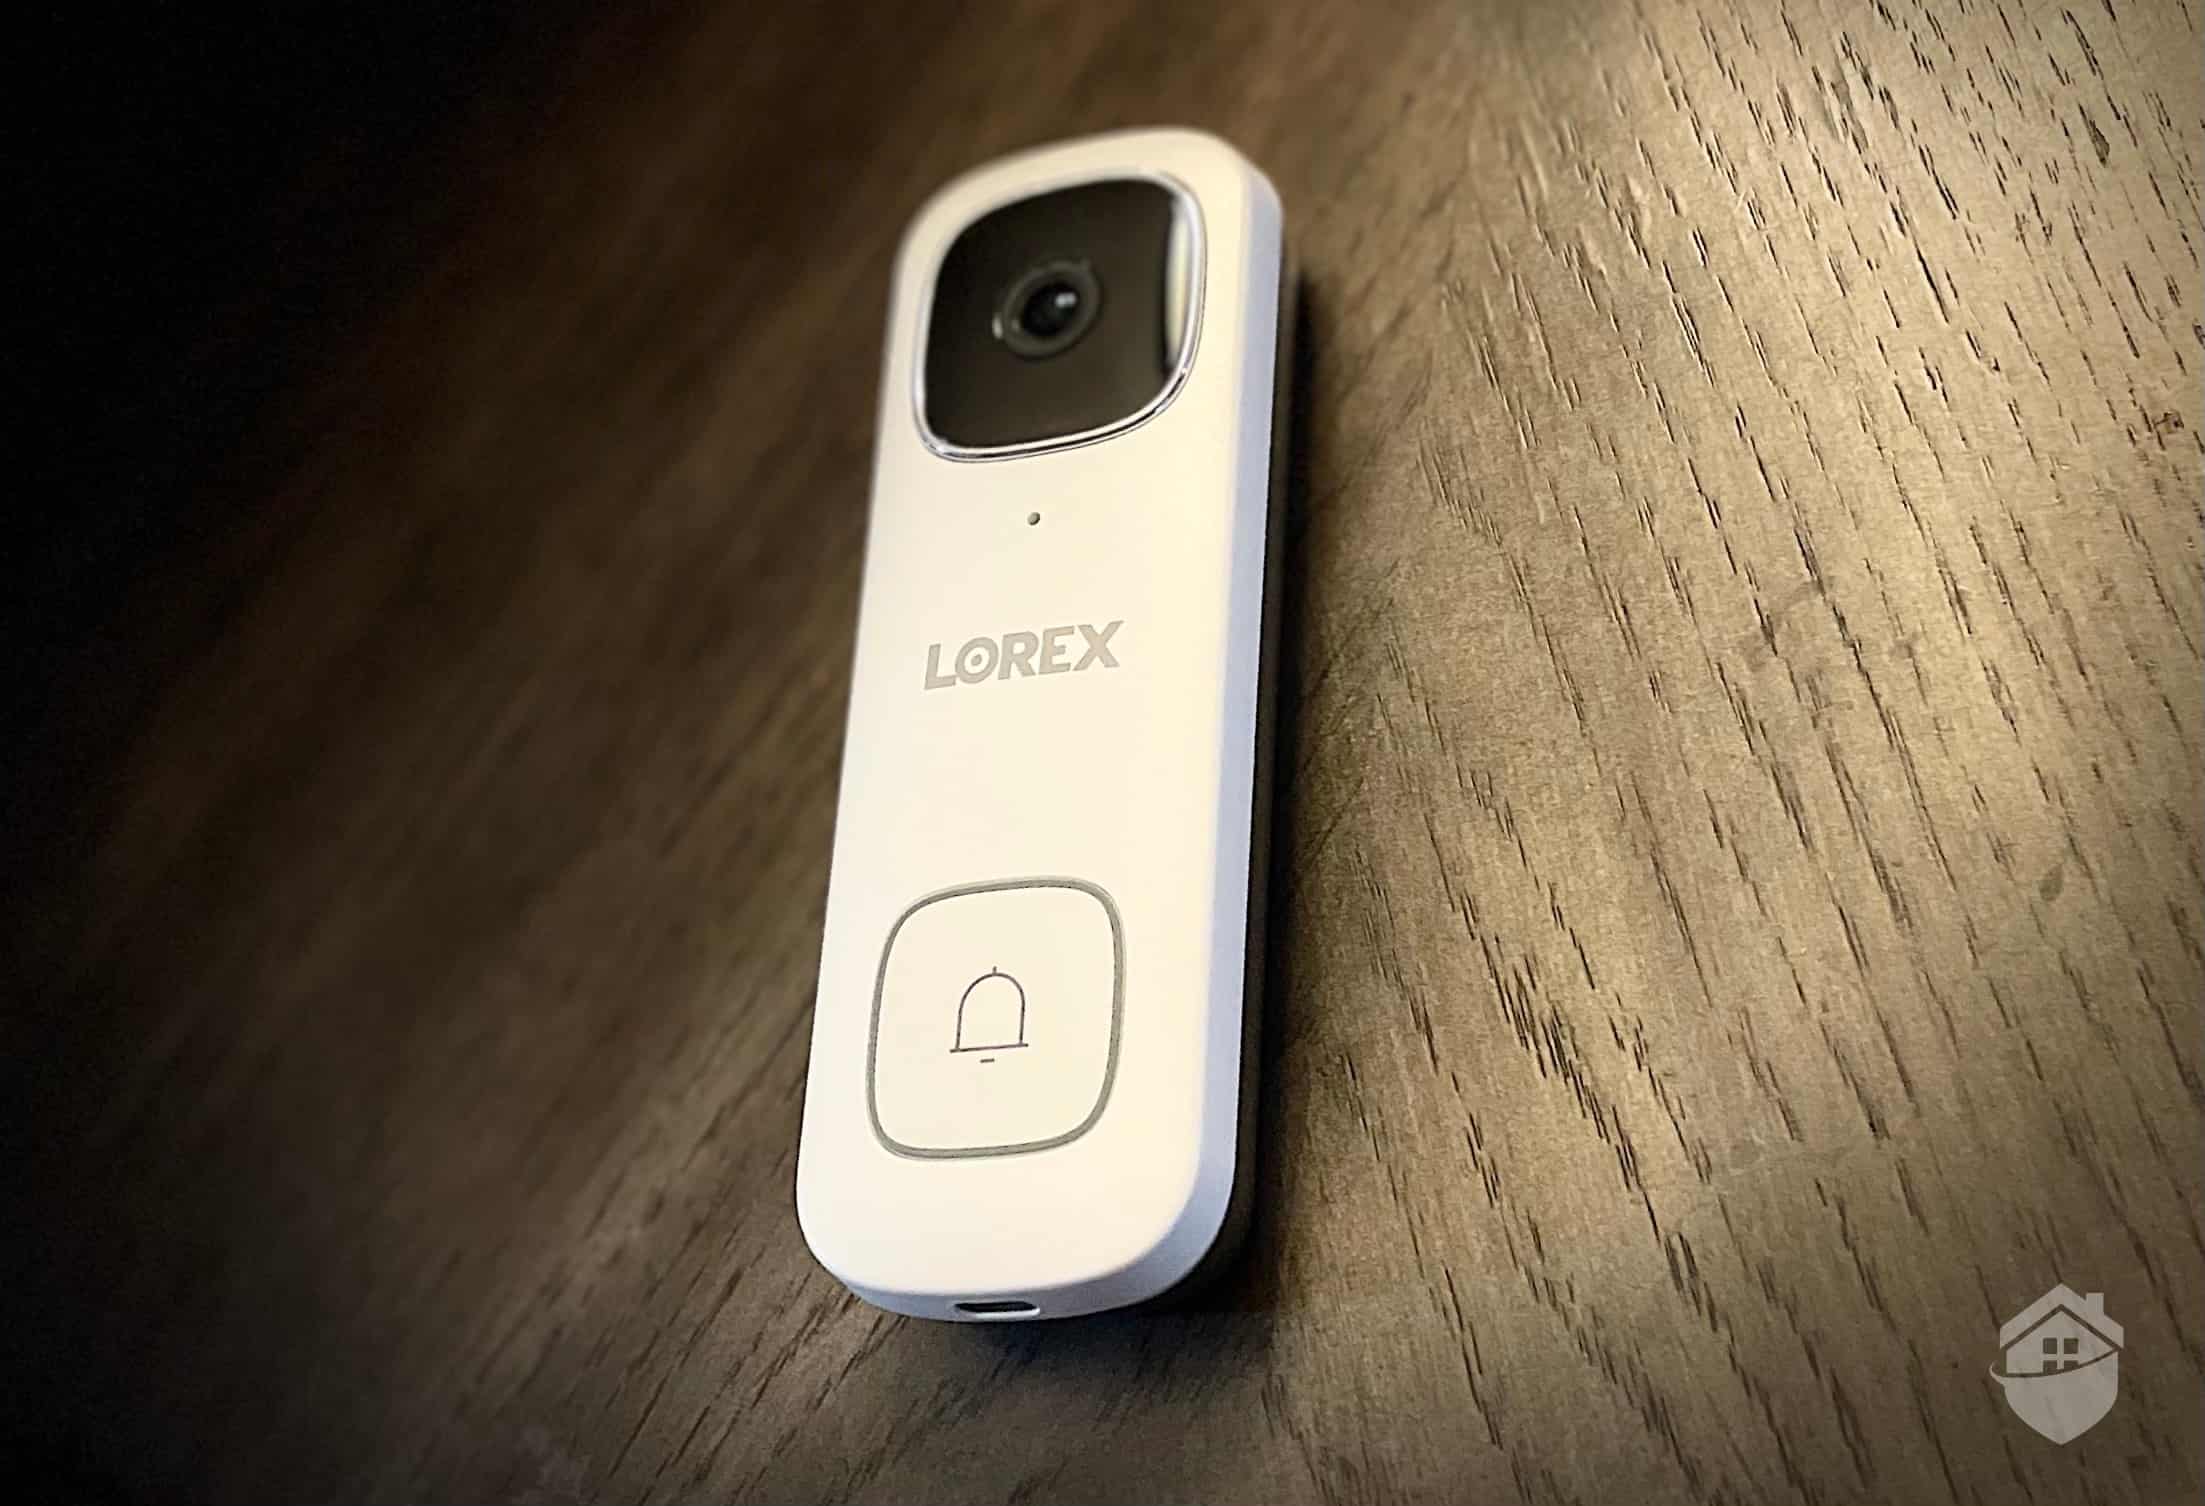 Lorex Doorbell Camera on the table